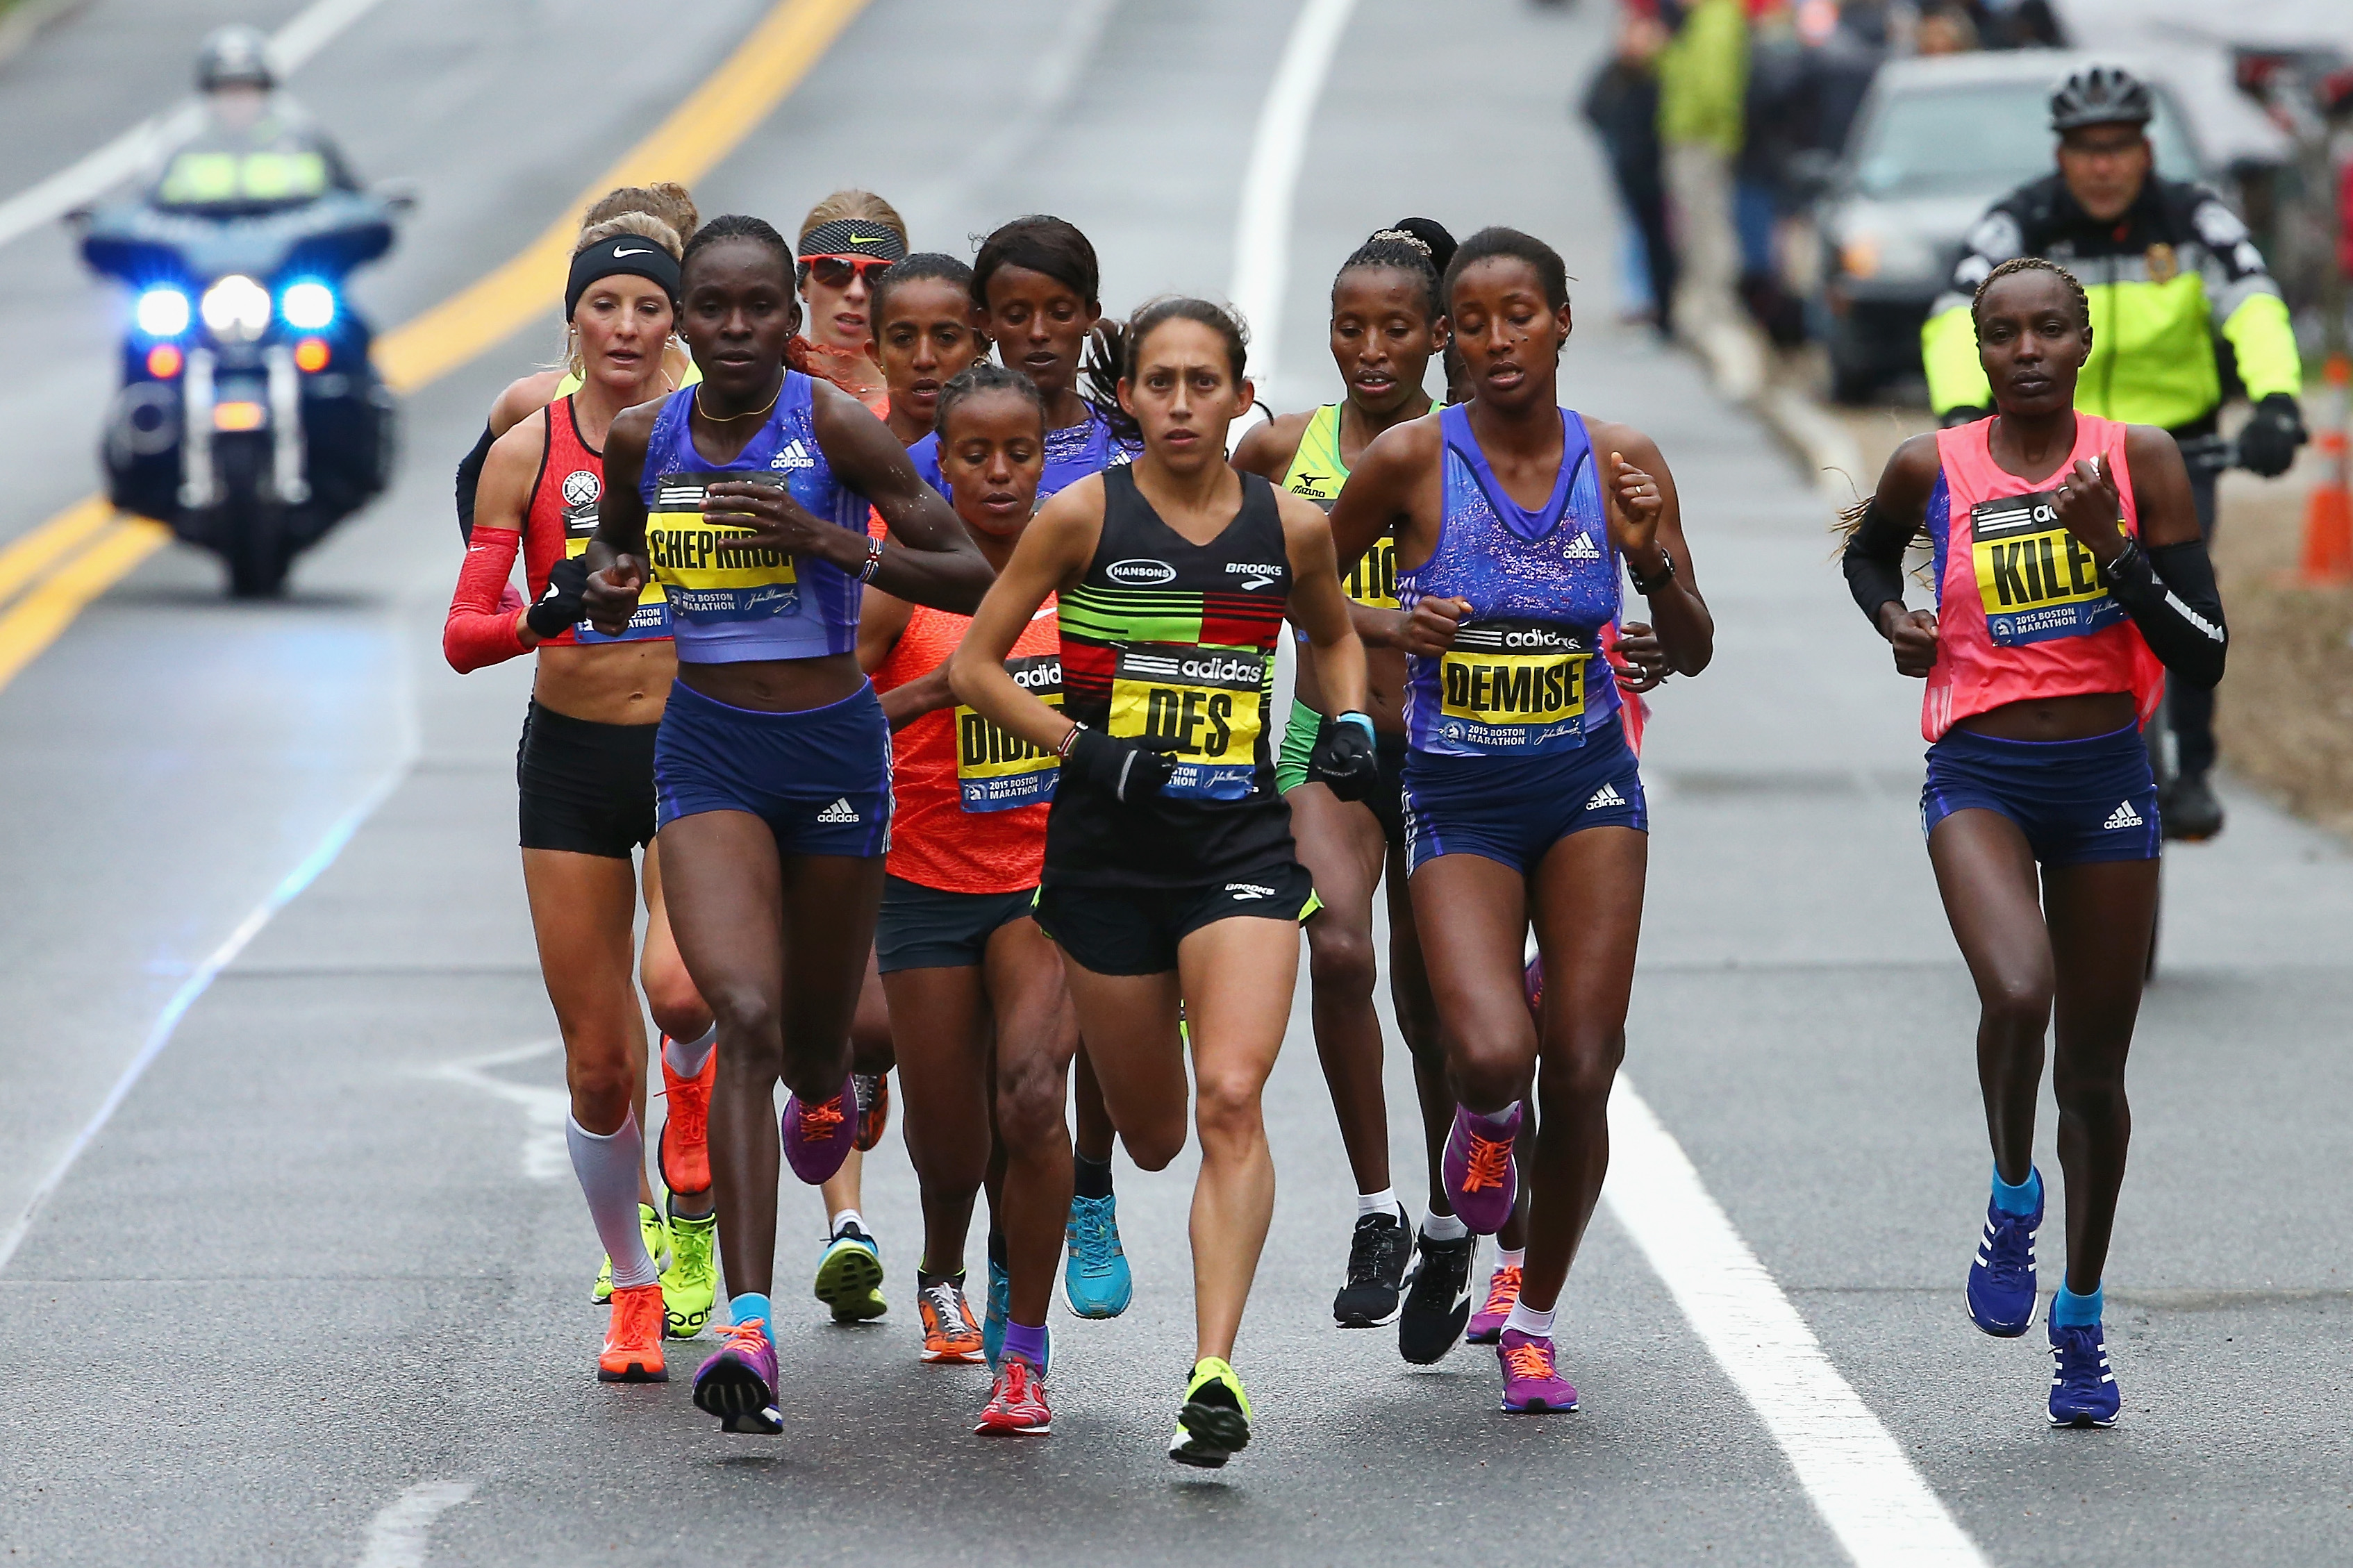 The $4,000 Price of Running the Boston Marathon